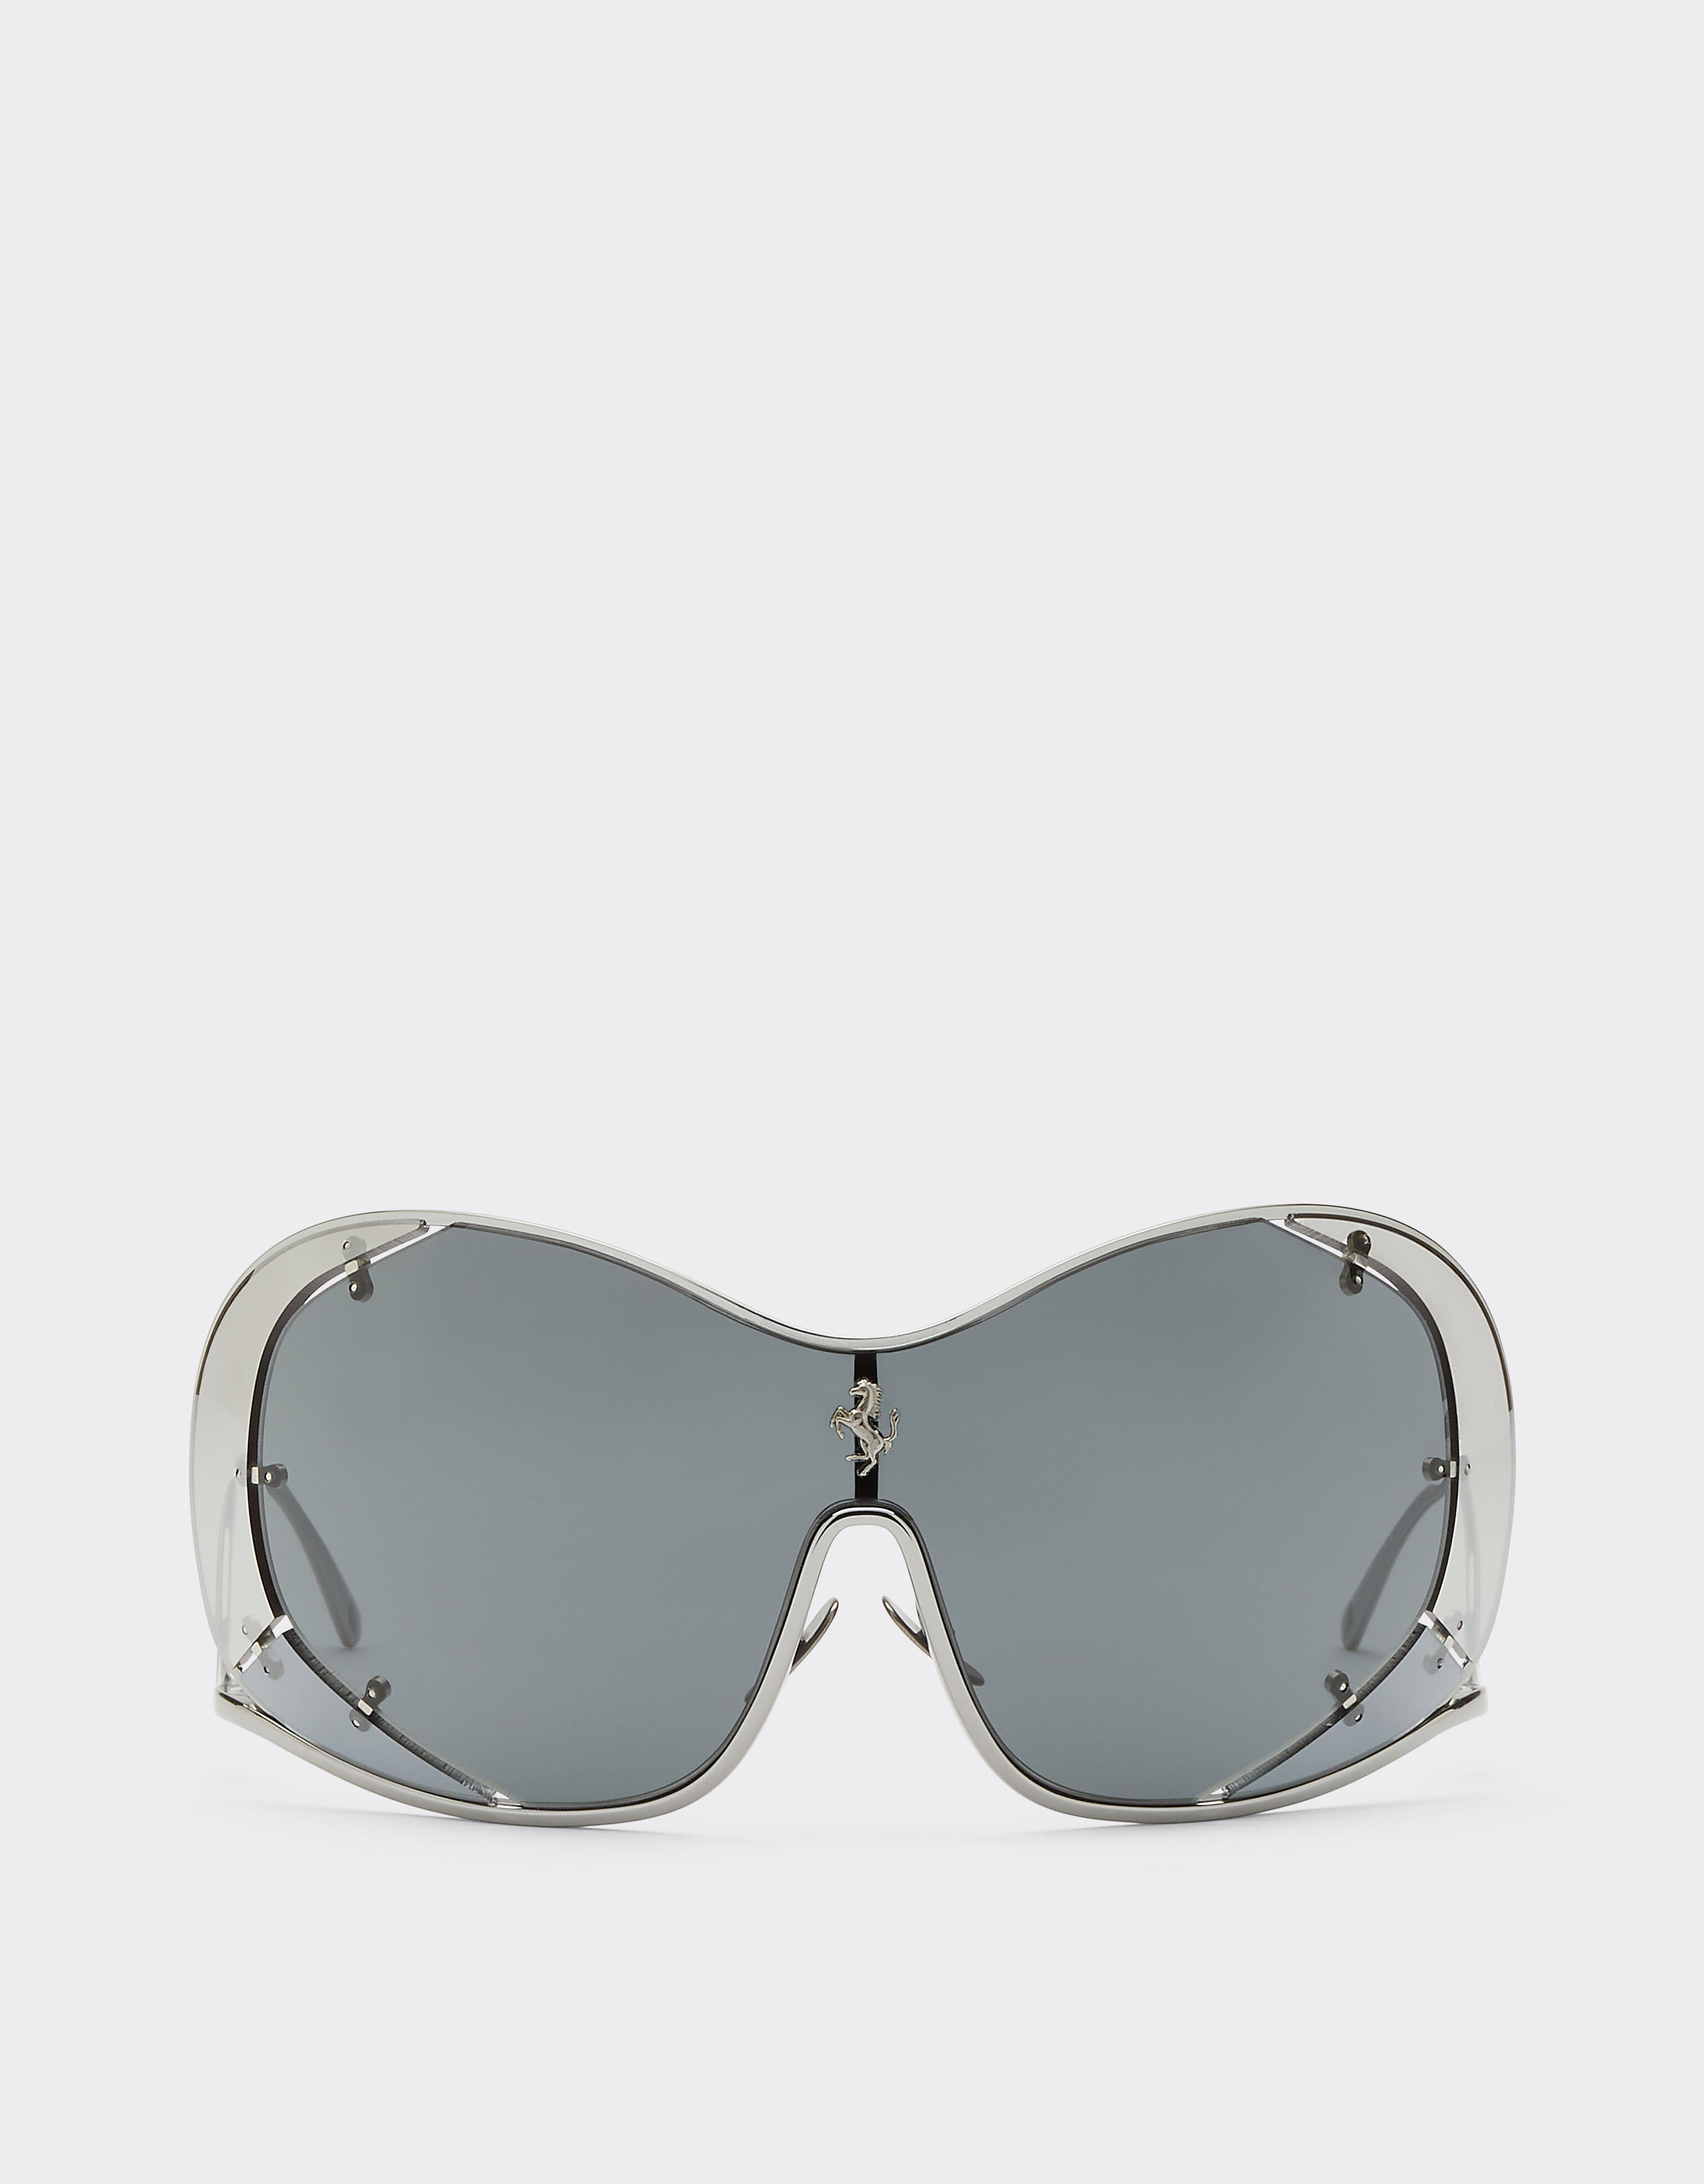 Ferrari Ferrari sunglasses with grey lenses Black F1201f